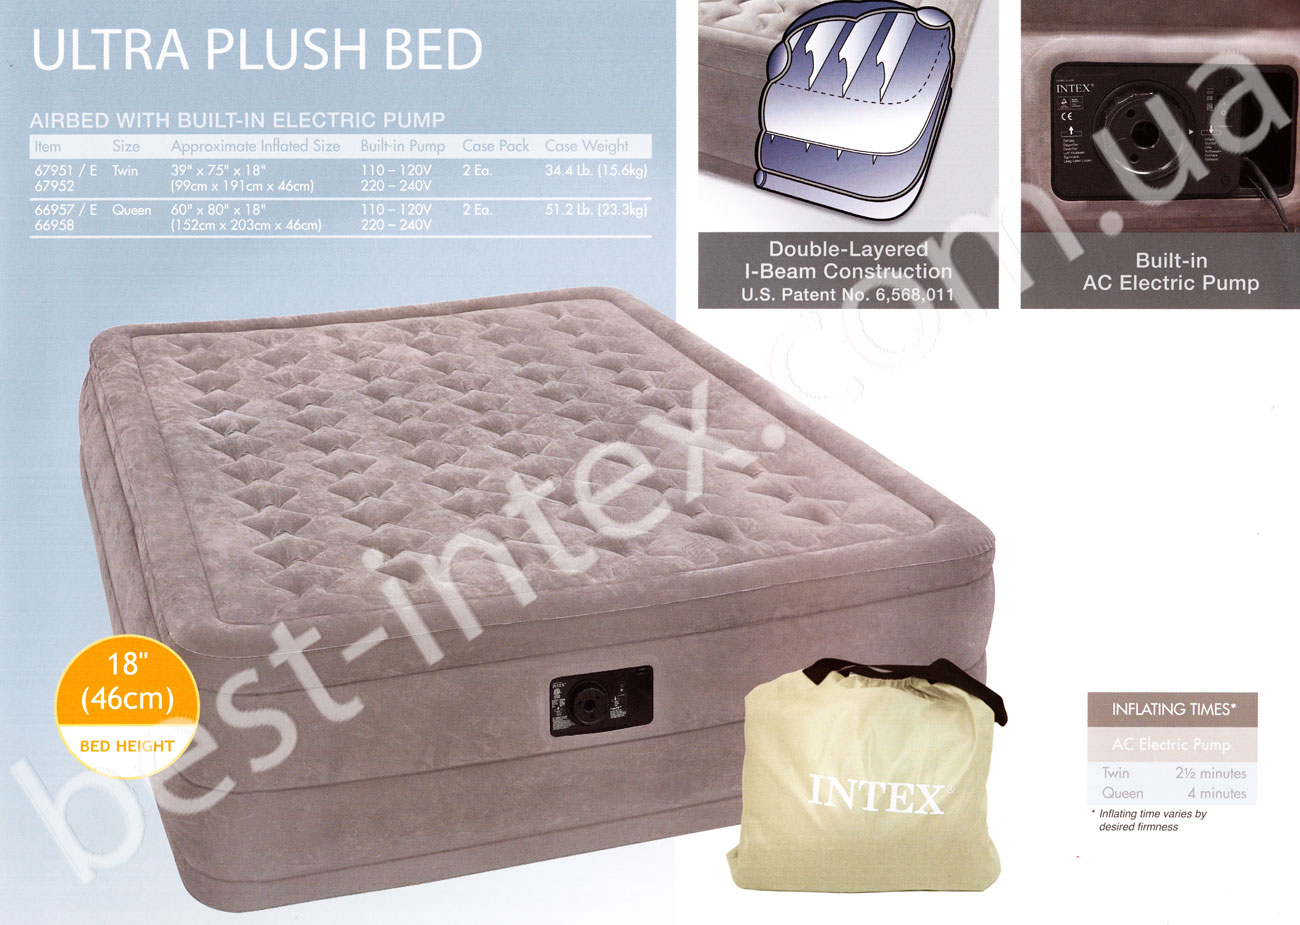 Ultra Plush Bed 67952, 66958